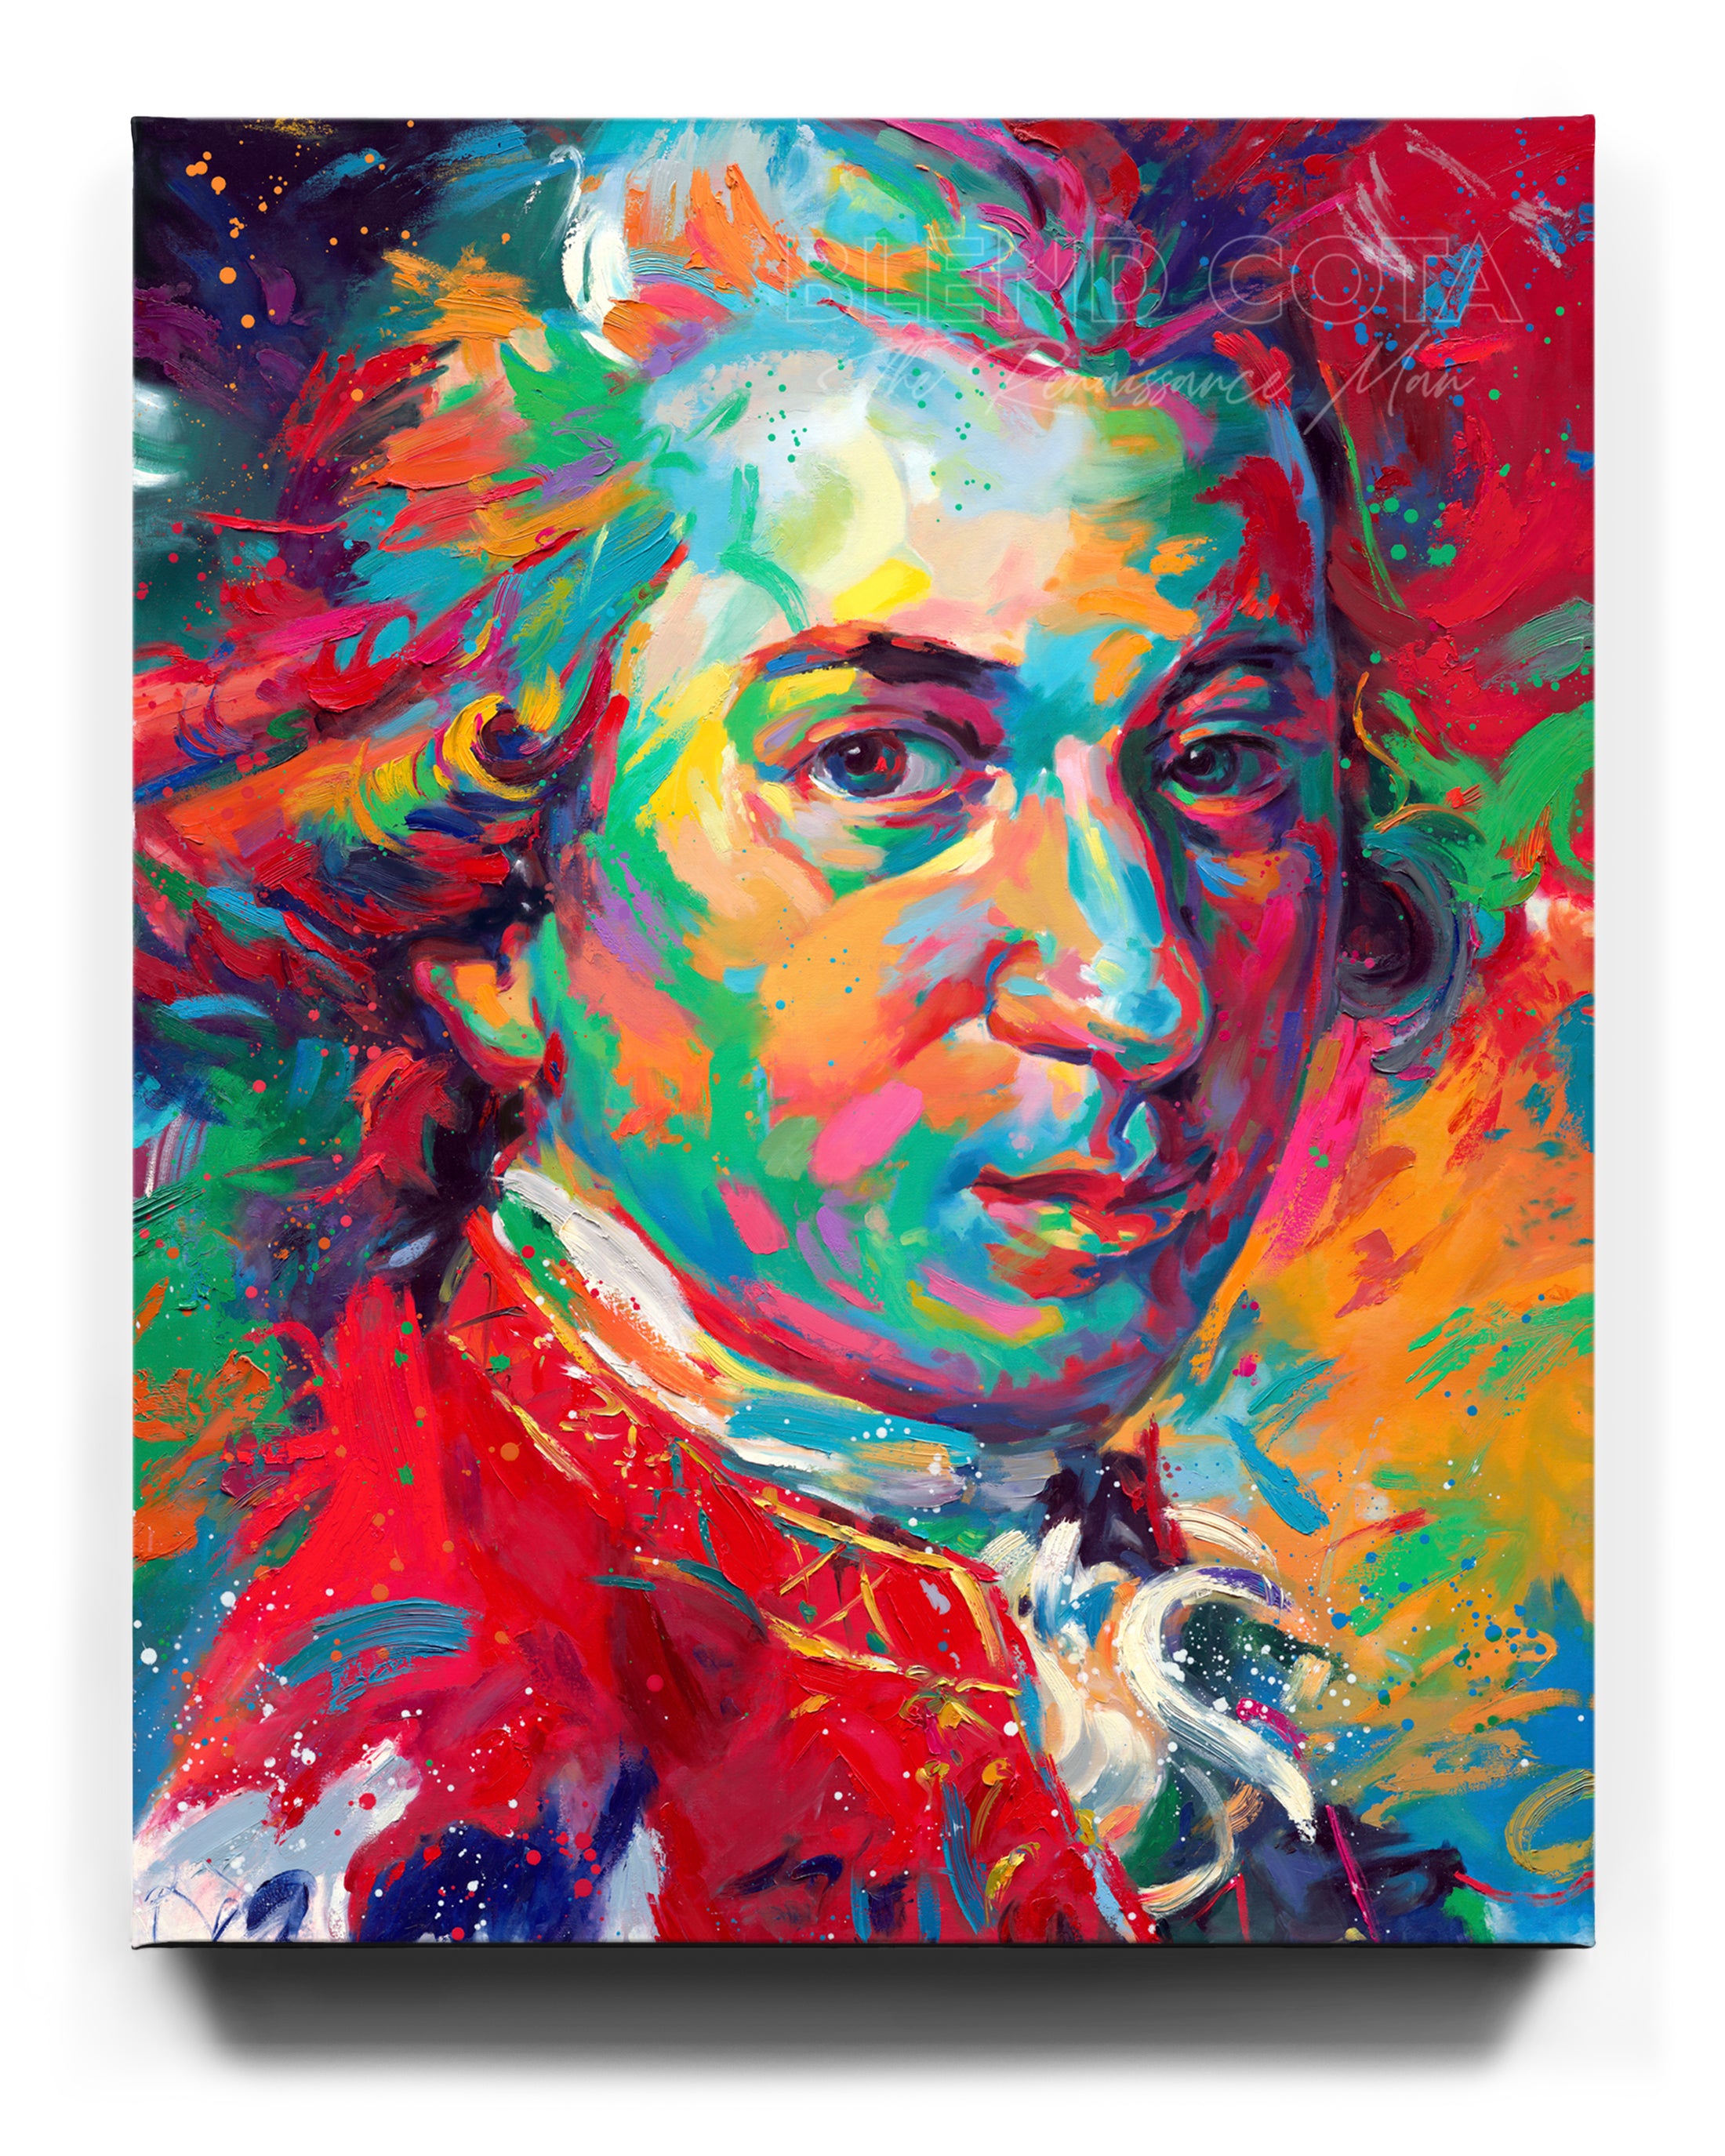 Mozart - Requiem Unfinished - Blend Cota Limited Edition Art on Canvas - Blend Cota Studios